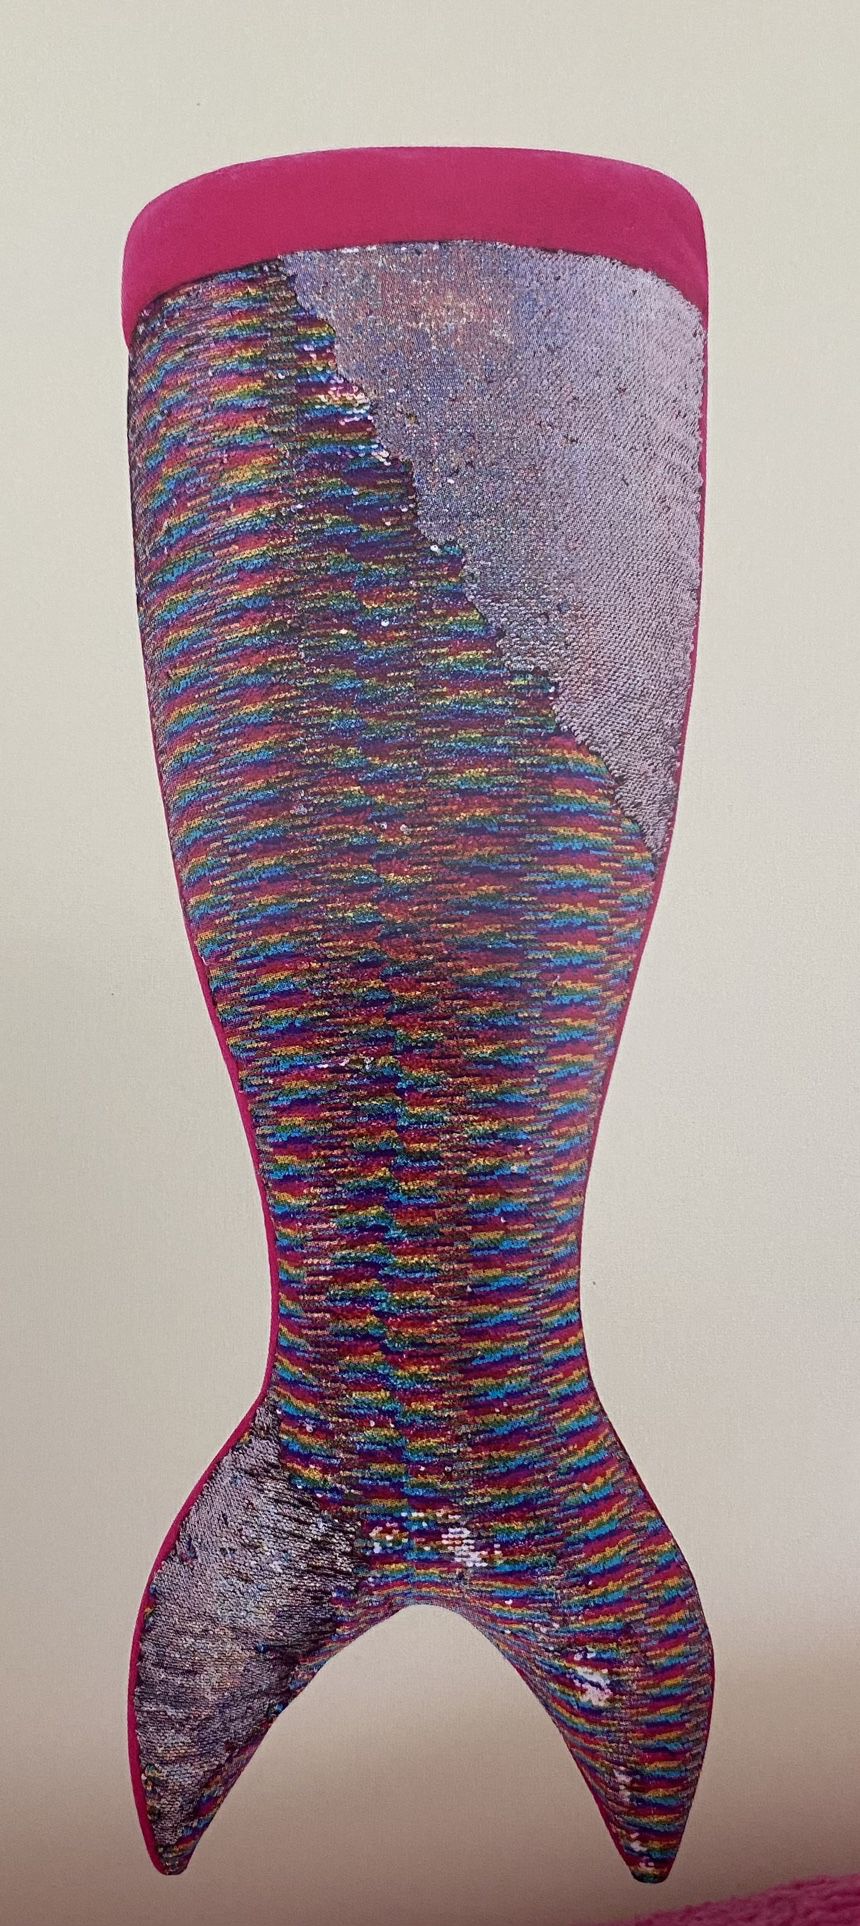 Cynthia Rowley Rainbow Sequin Mermaid Tail Snuggle Tail